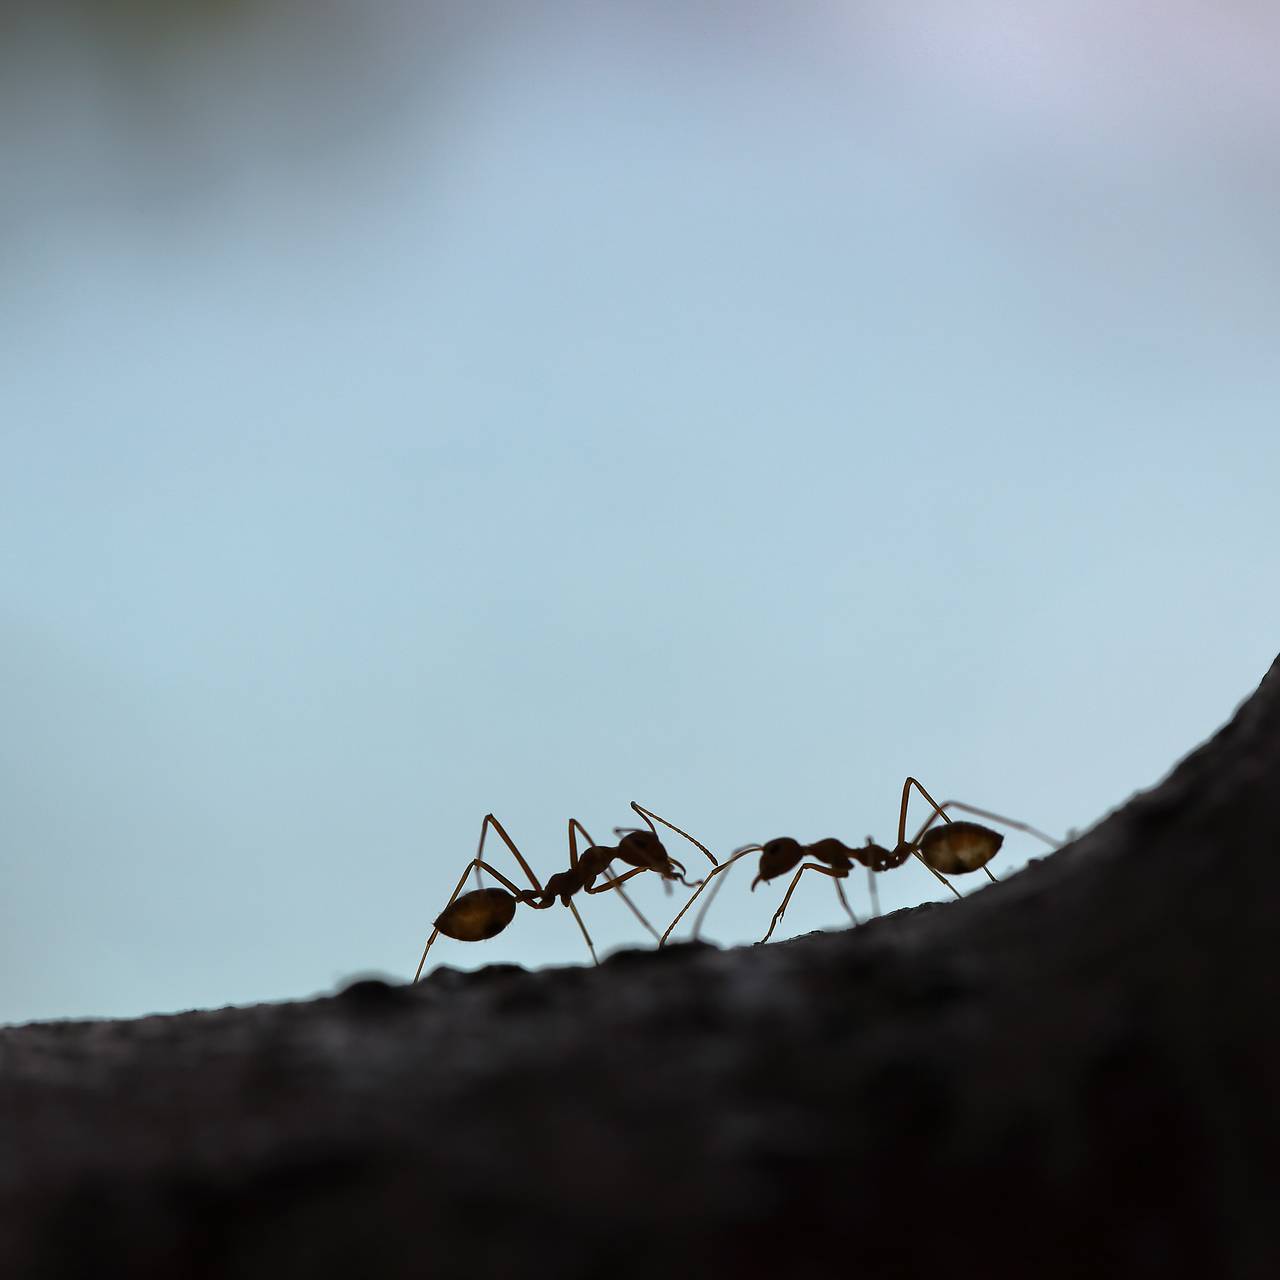 Моча муравья